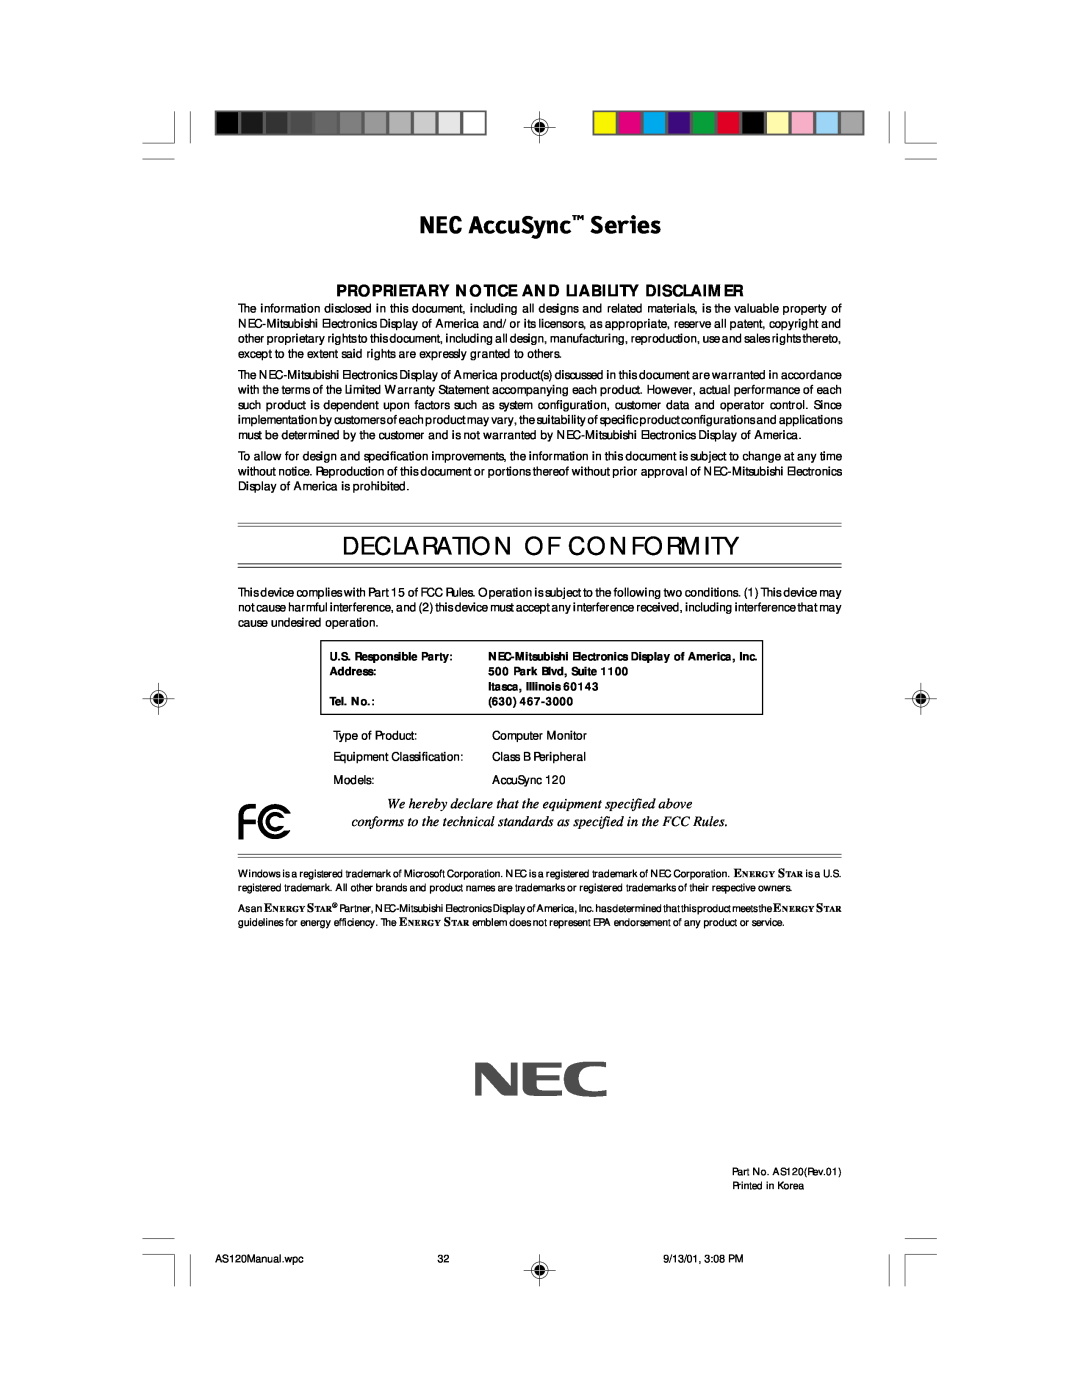 NEC AccuSync 120 user manual NEC AccuSync Series, Declaration Of Conformity, Proprietary Notice And Liability Disclaimer 